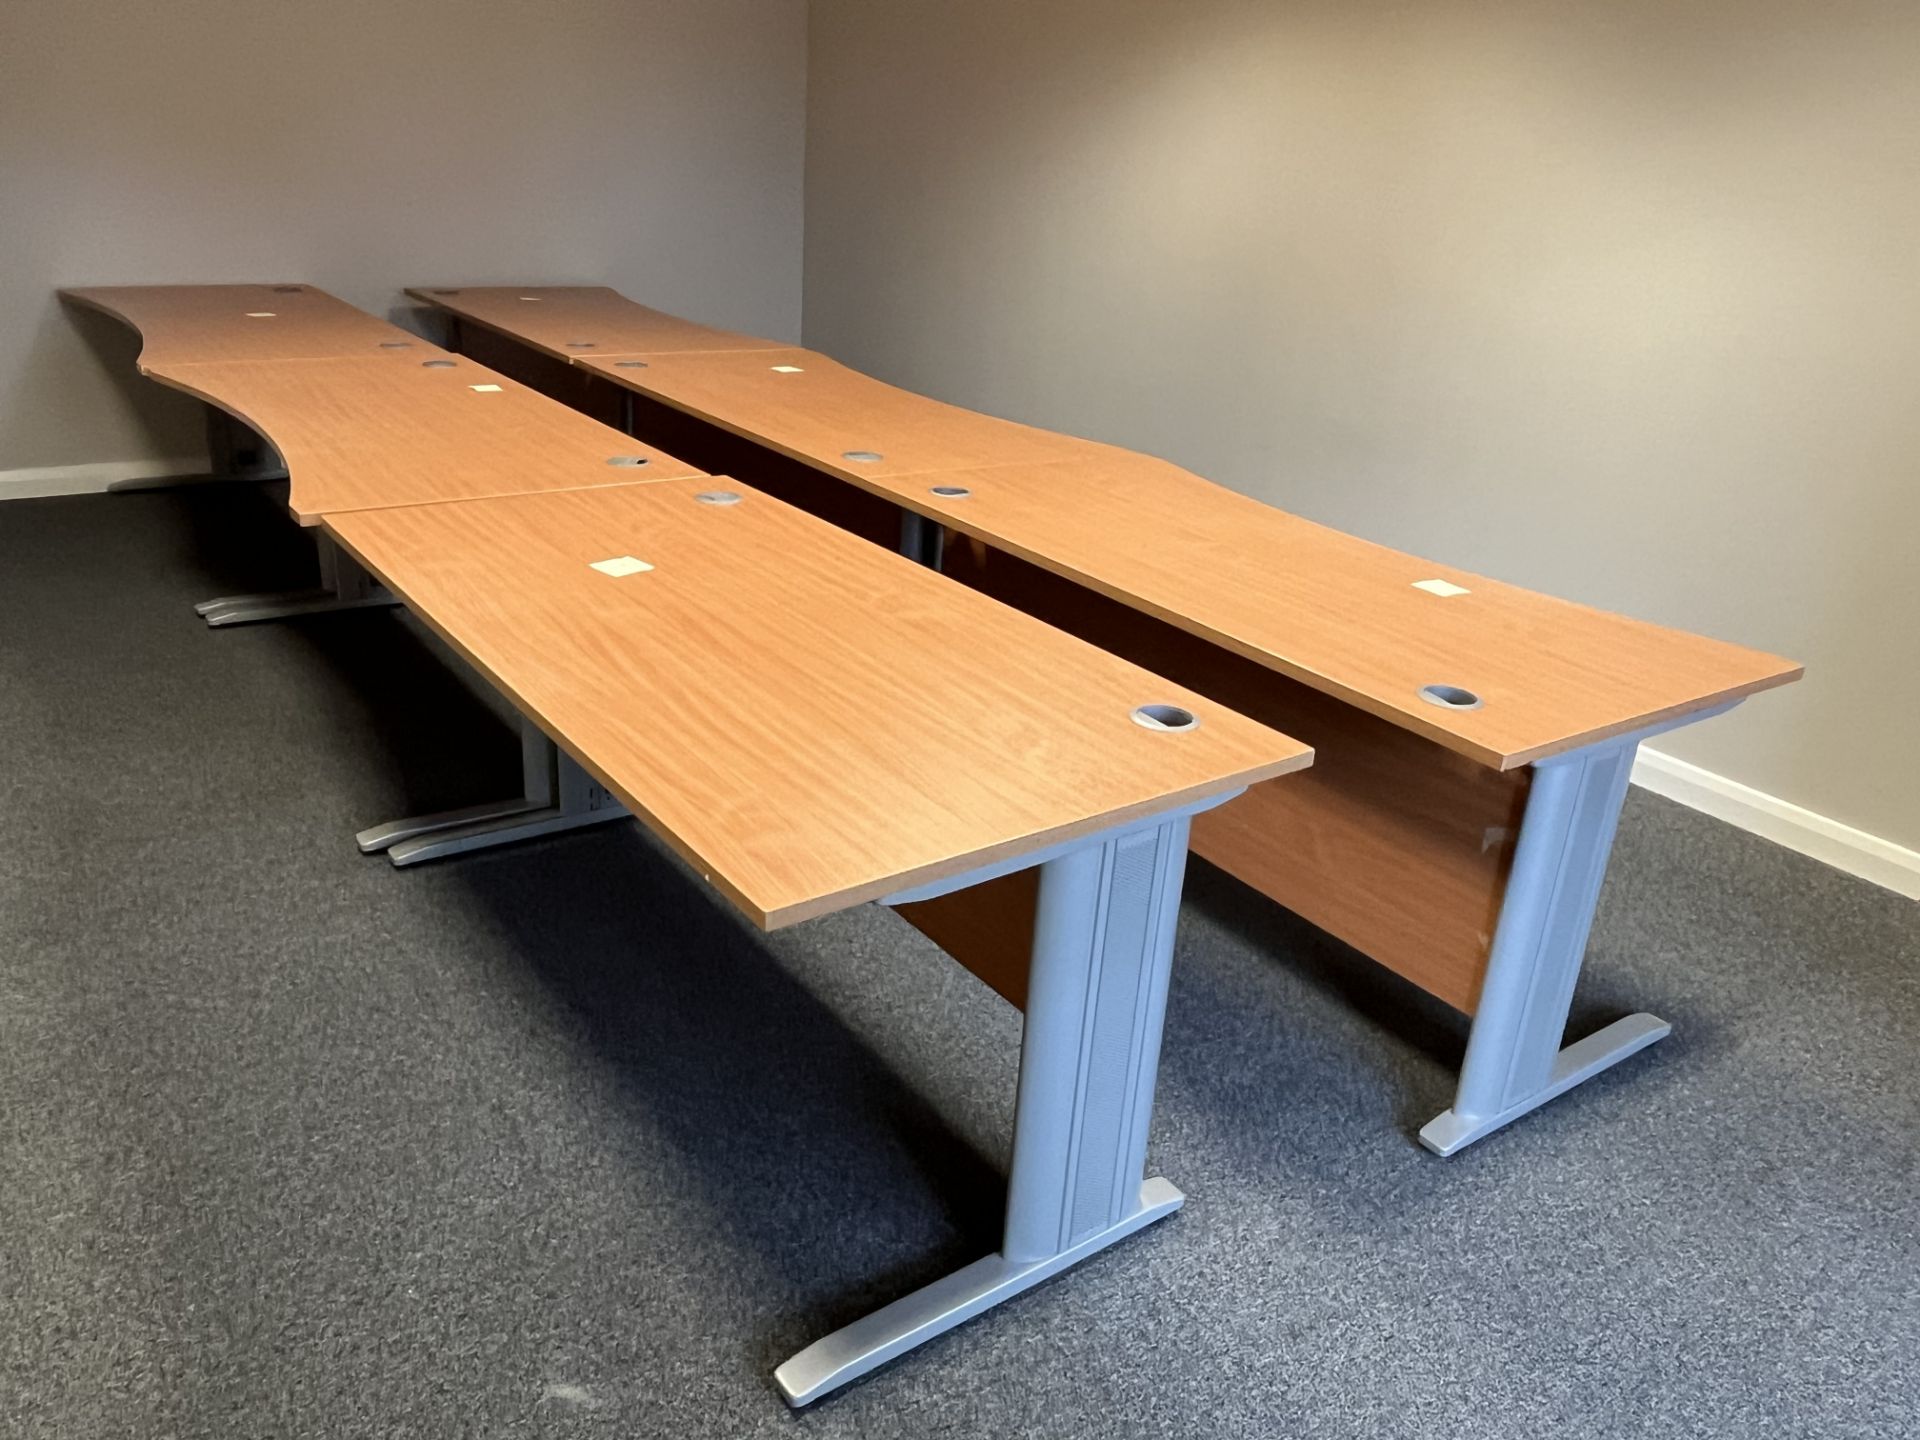 5x (no.) shaped front light oak veneer desks, a rectangular light oak veneer desk and a light oak